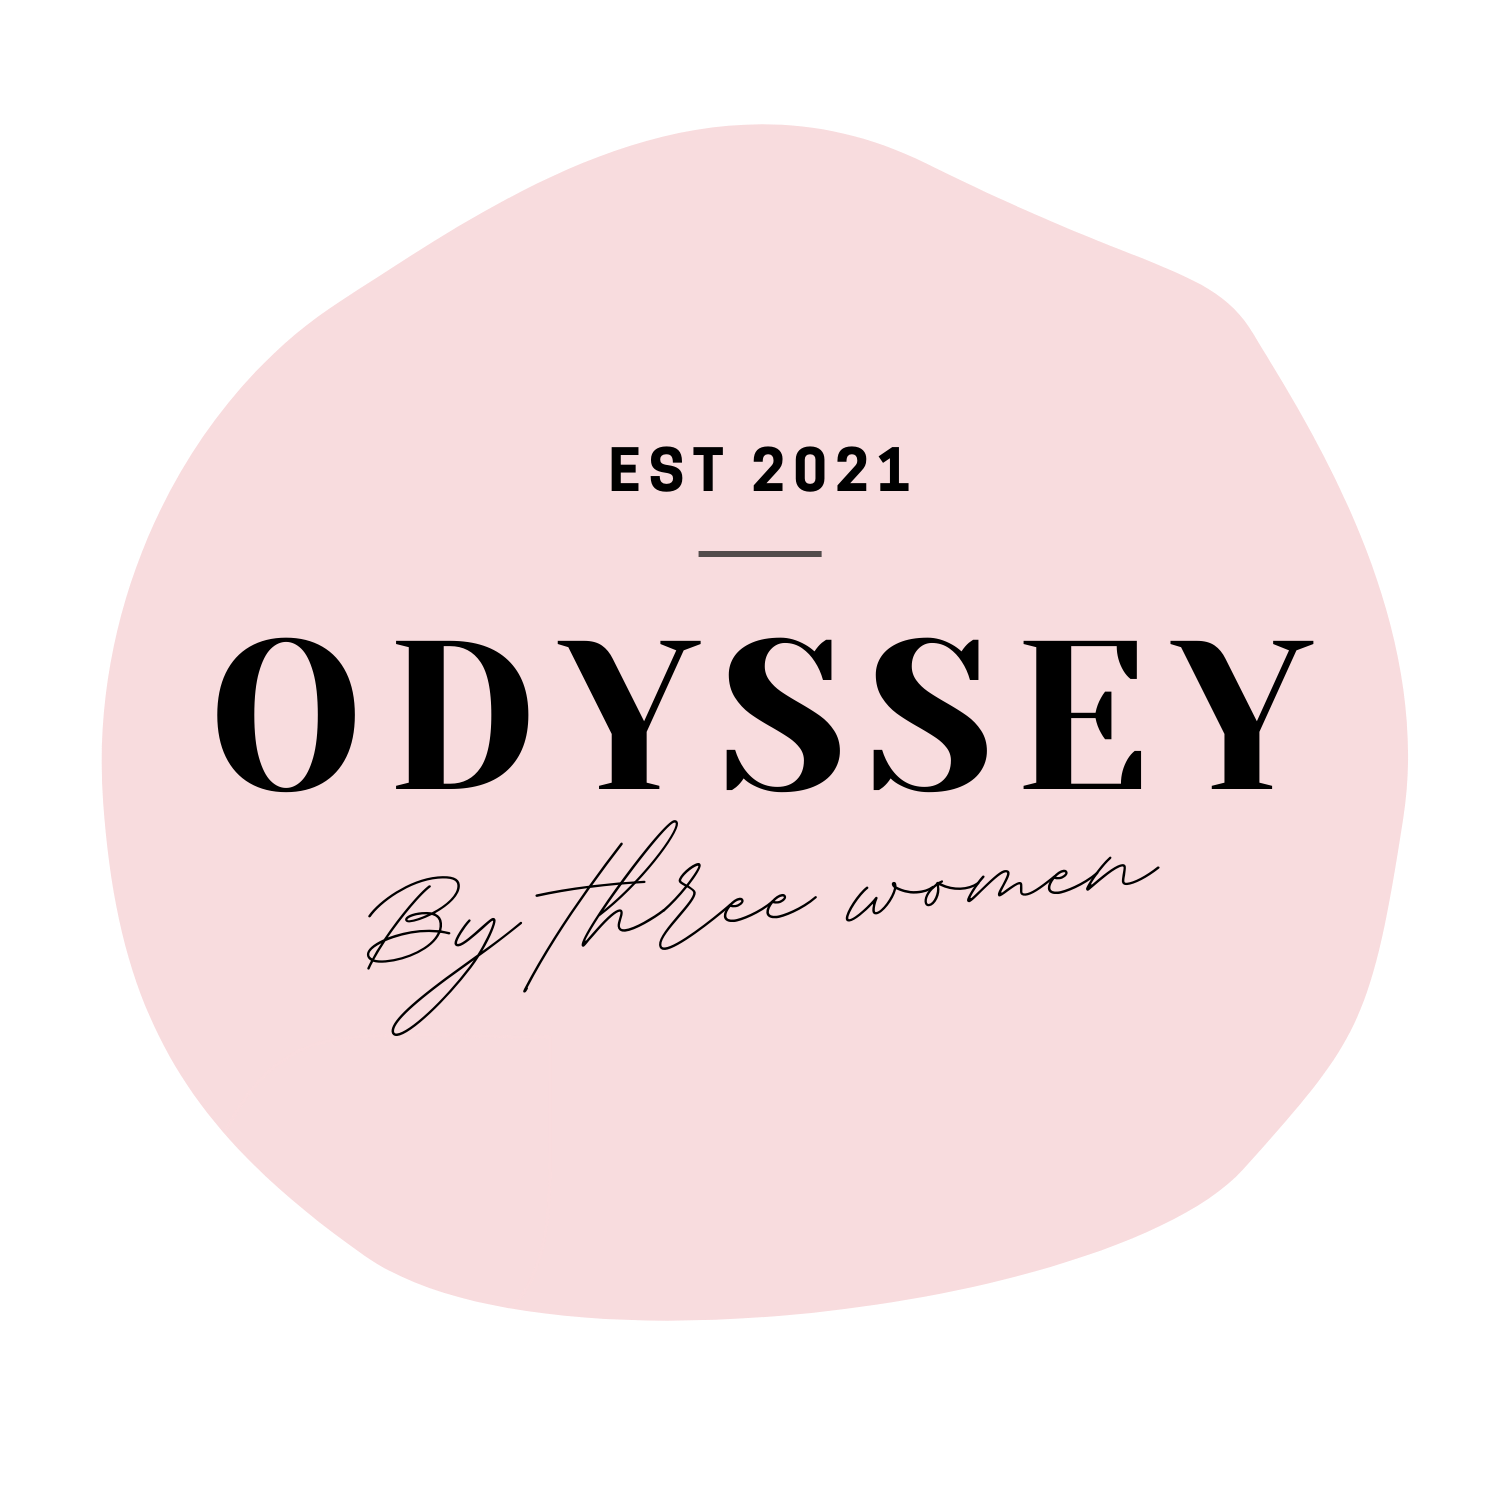 Odysseybythreewomen